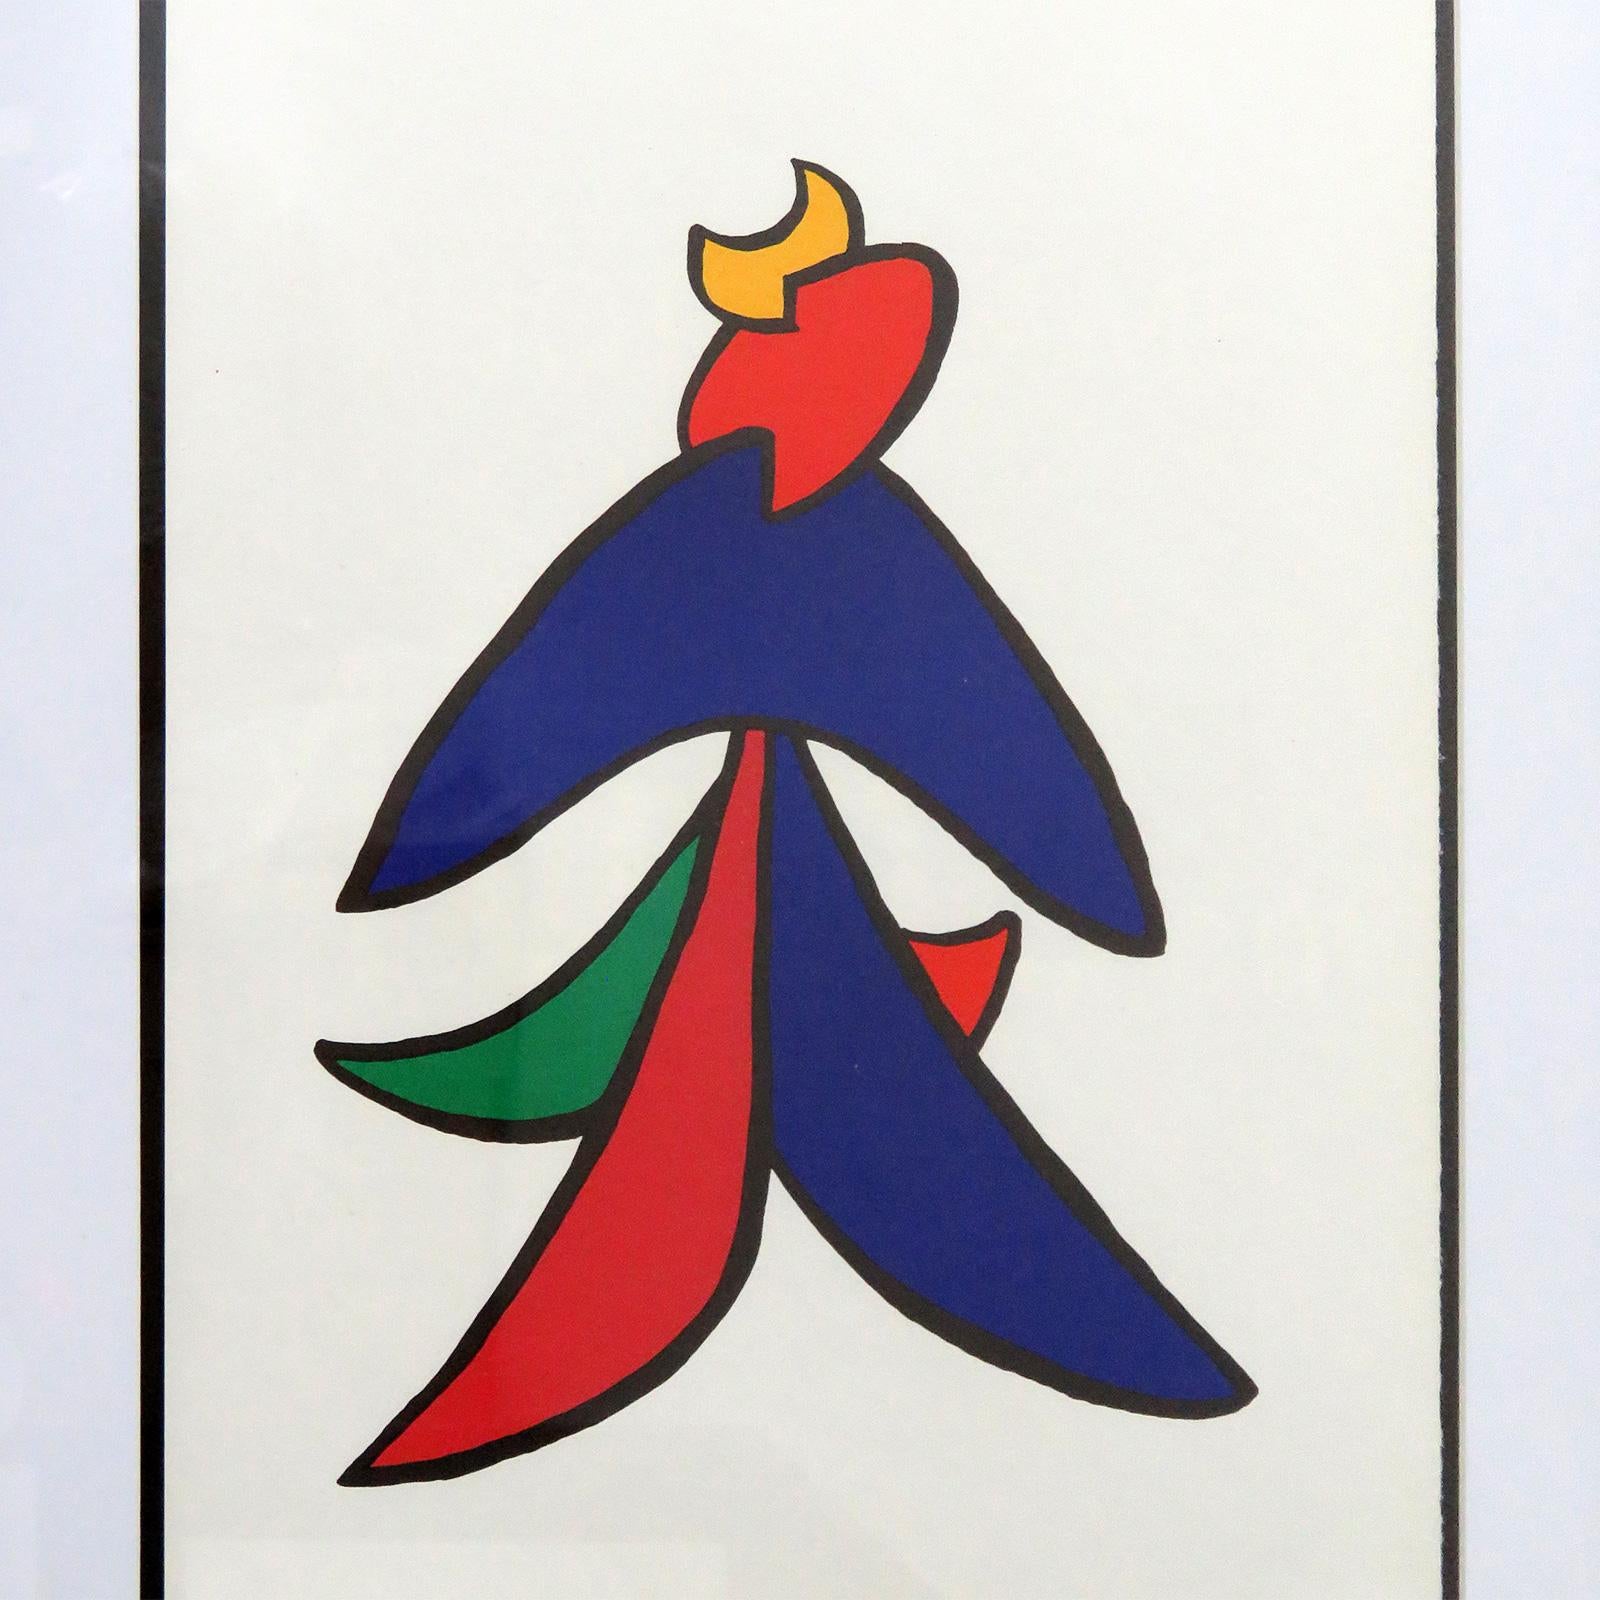 American Alexander Calder Lithography, 1963